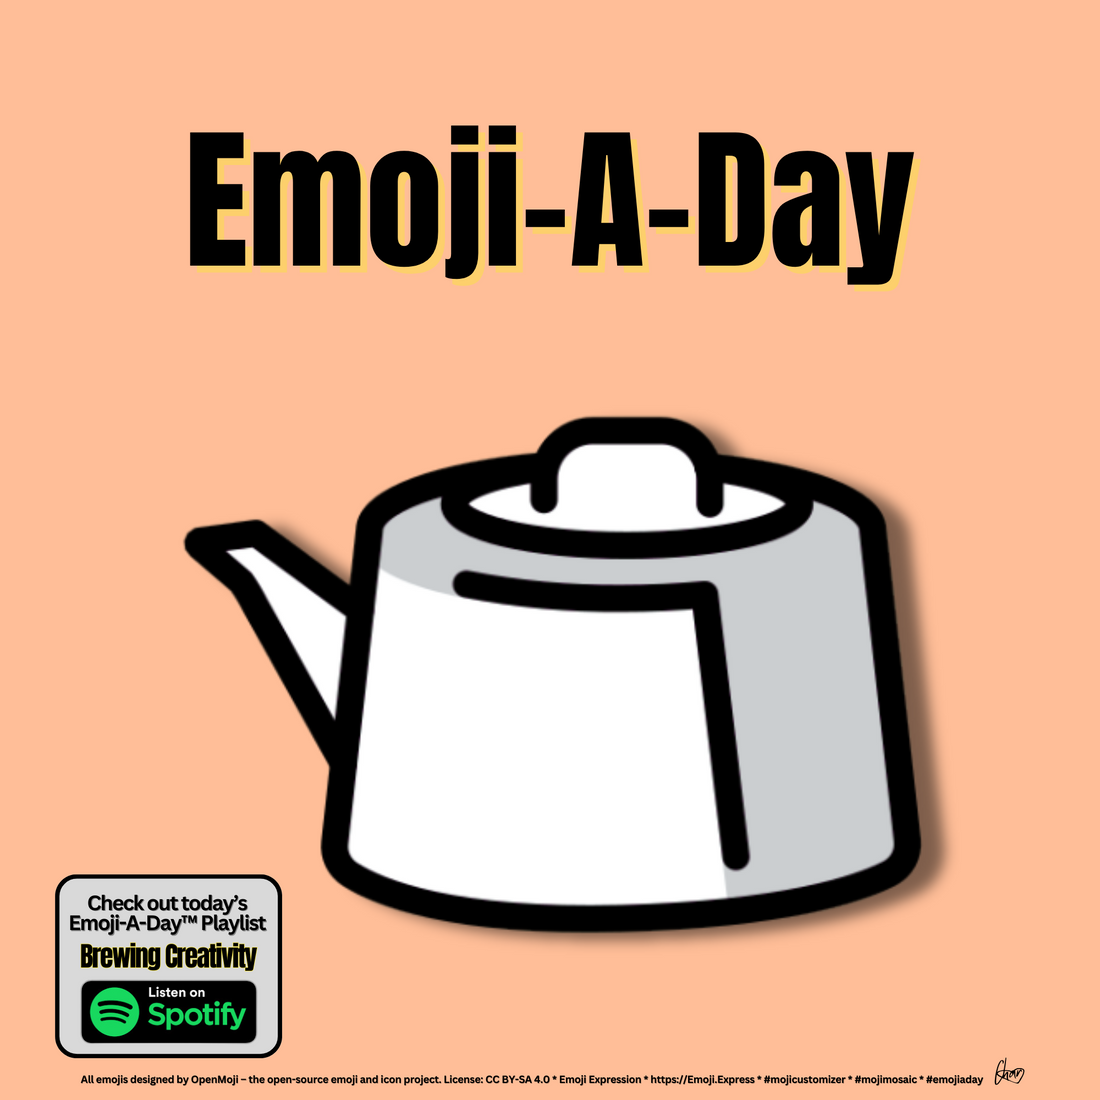 Emoij-A-Day theme with Teapot emoji and Brewing Creativity Spotify Playlist